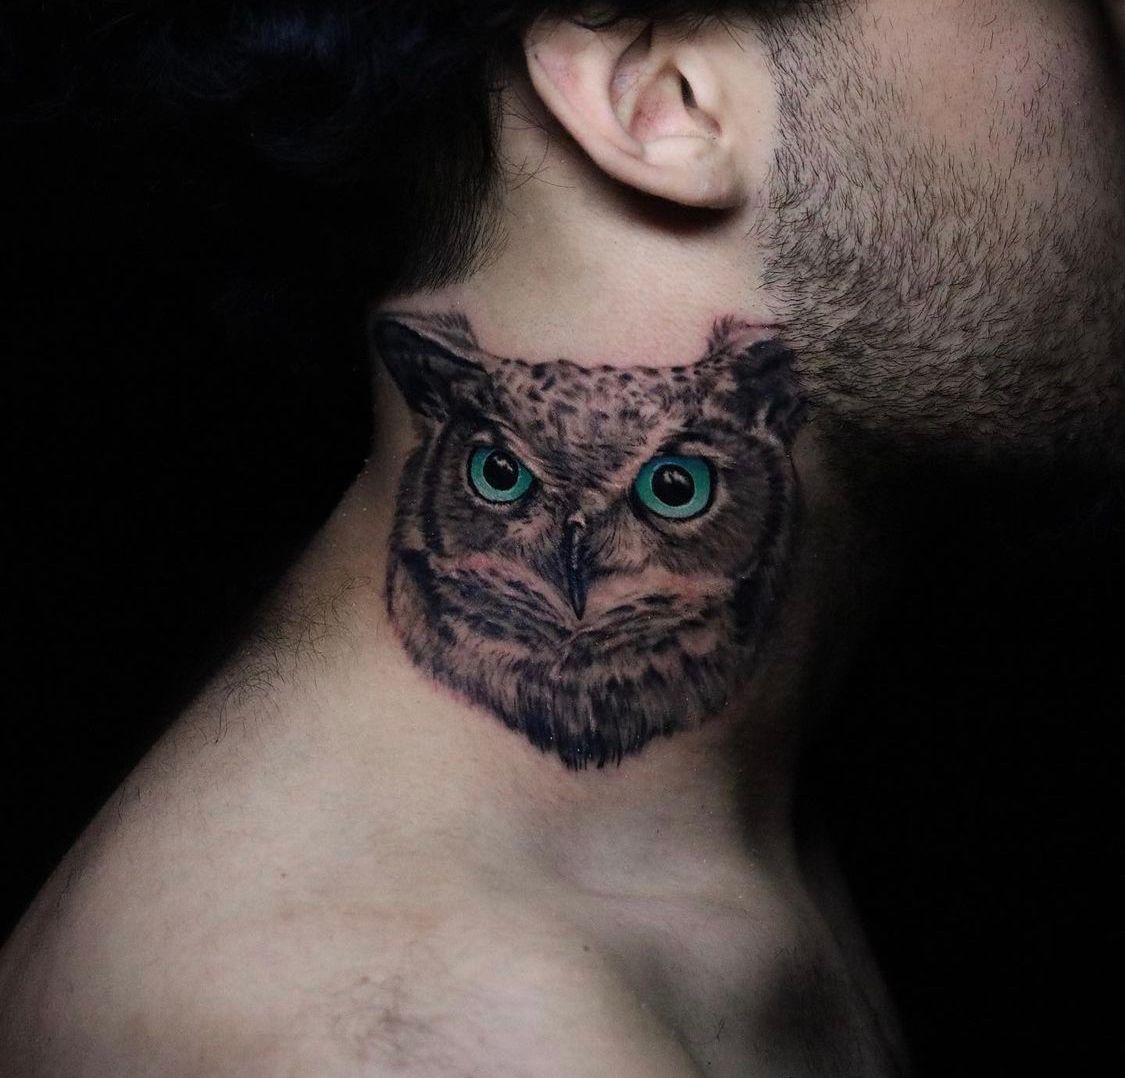 Neck tattoo  owl design on neck  Jamnagar tattoo studio  YouTube